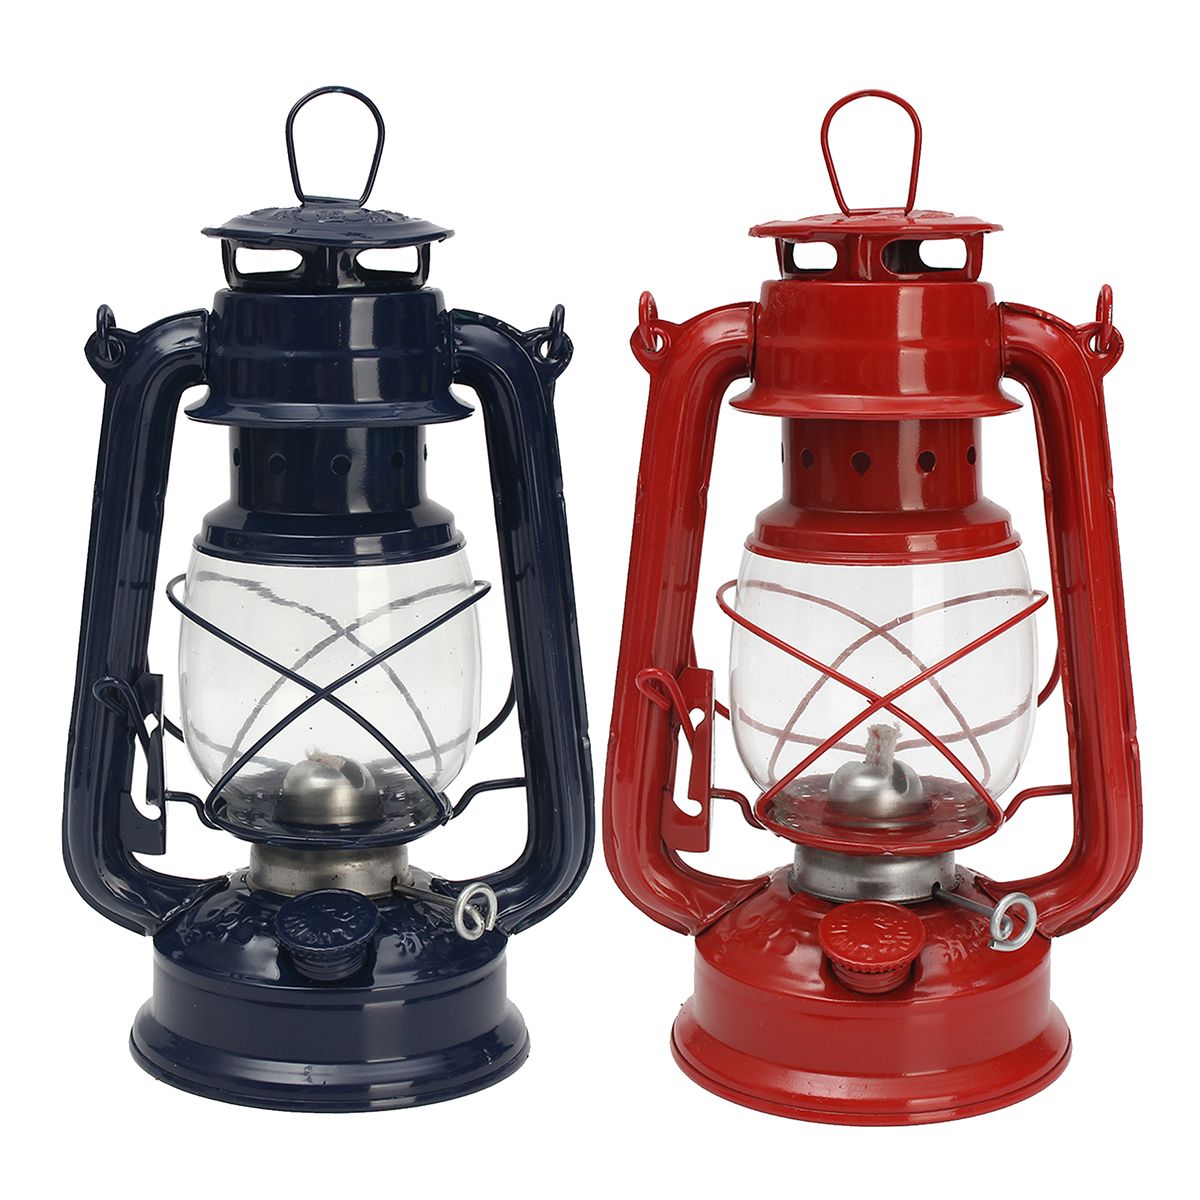 Vintage-Oil-Lamp-Lantern-Kerosene-Paraffin-Hurricane-Lamp-Light-Outdoor-Camping-1345072